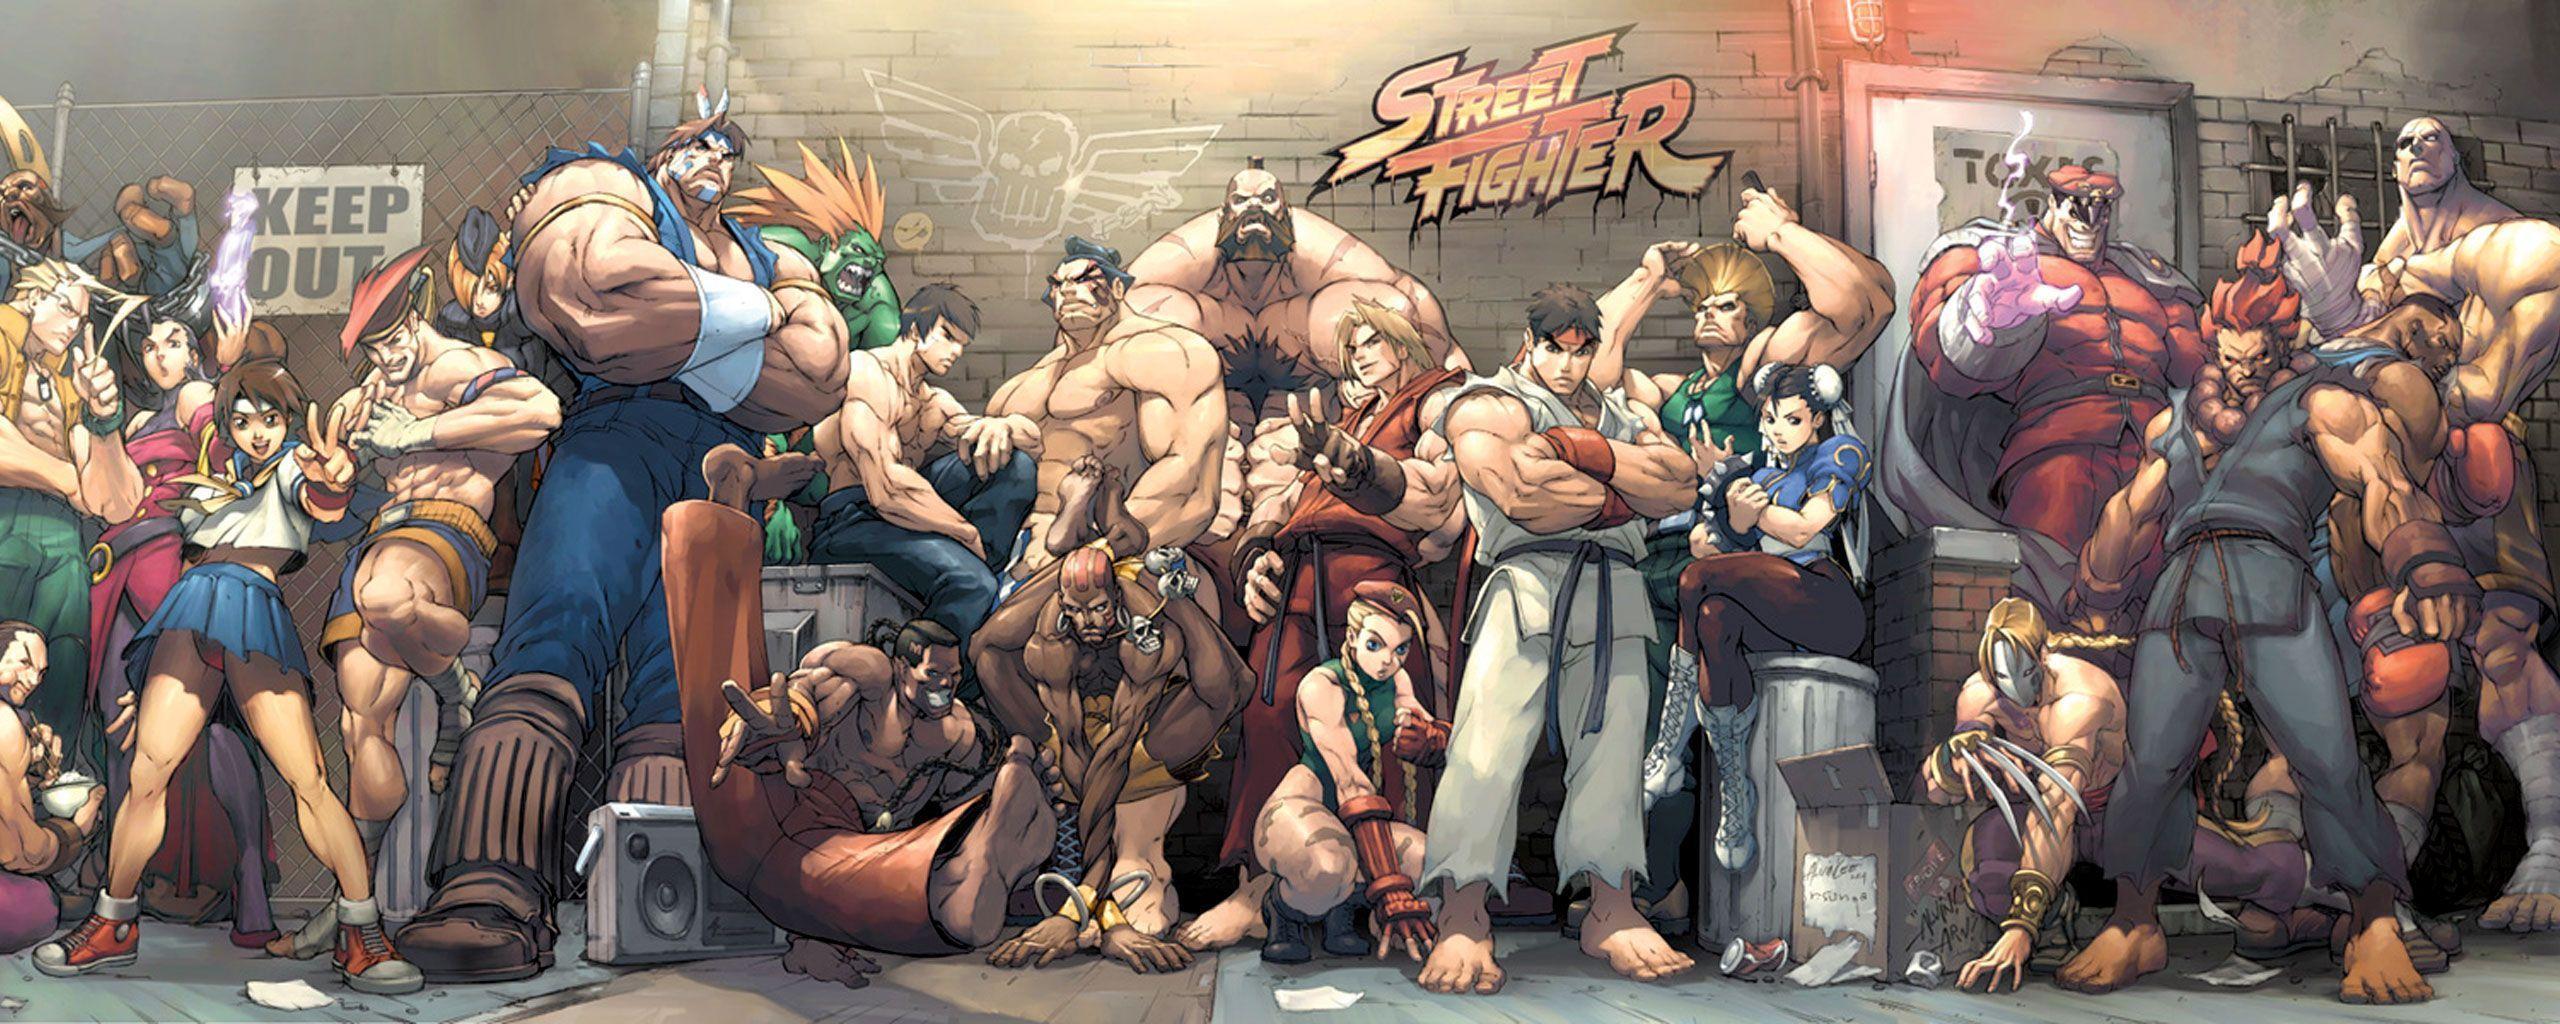 Street Fighter HD Wallpapers - Fondo de pantalla de la cueva